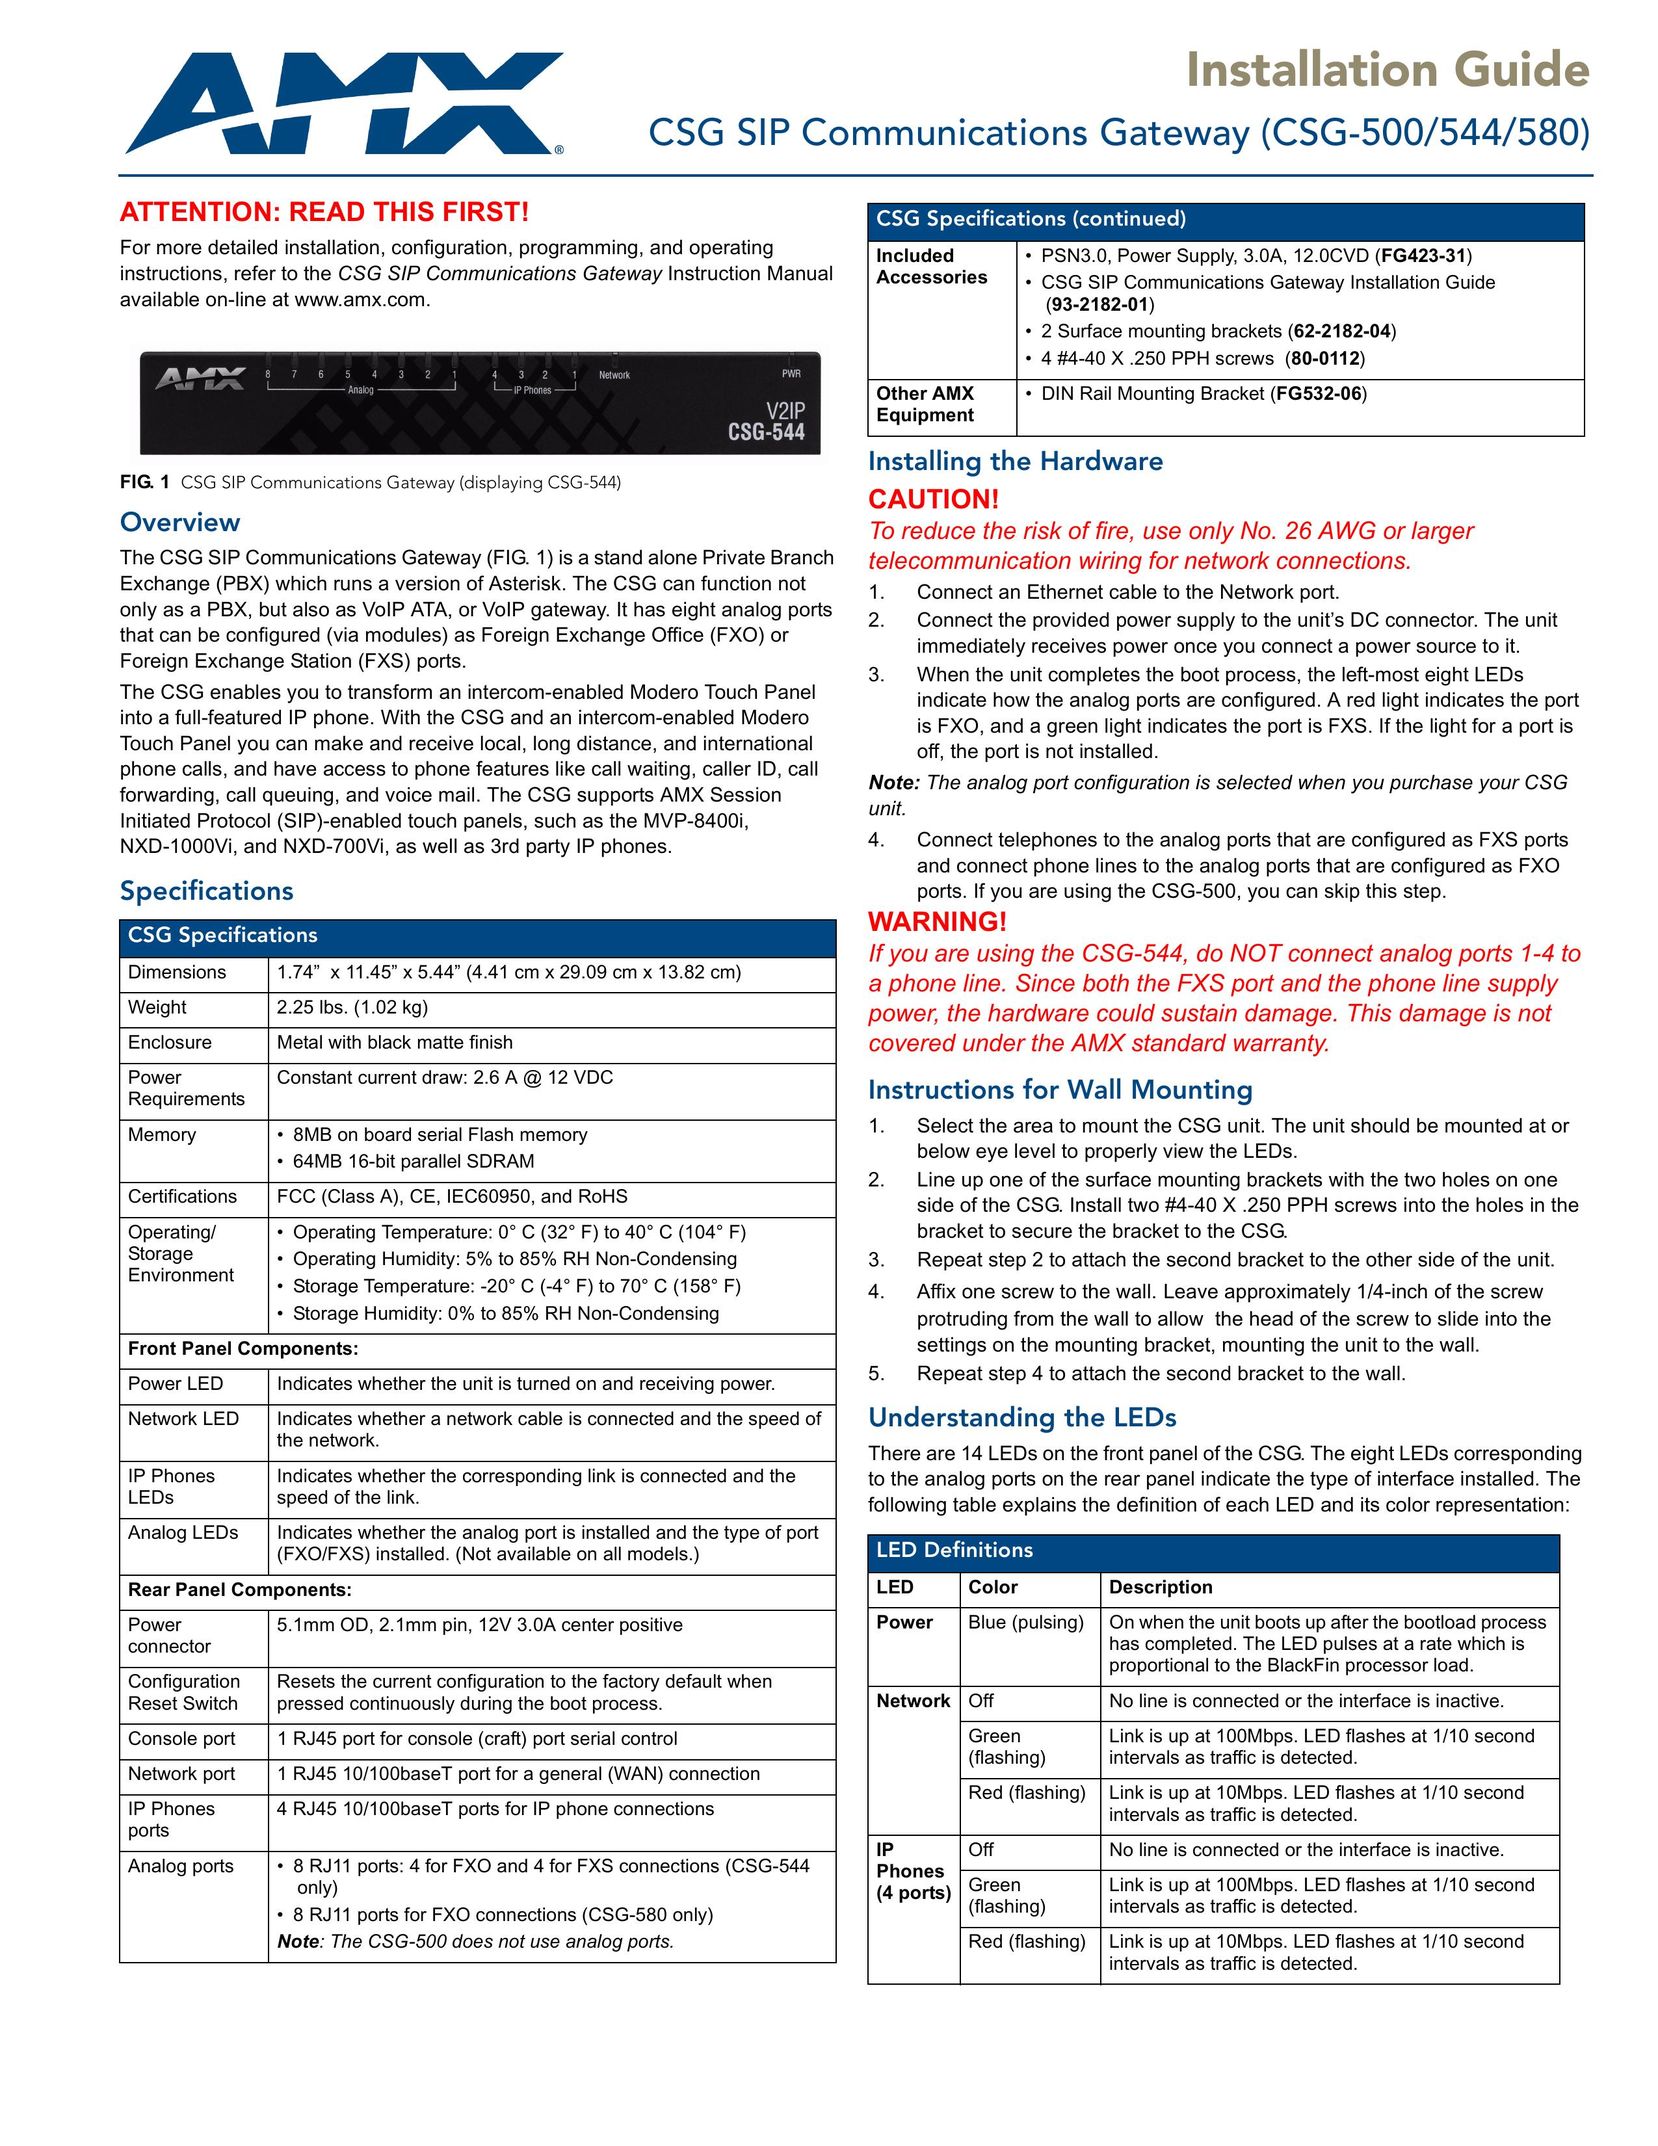 AMX 544/580 Network Card User Manual